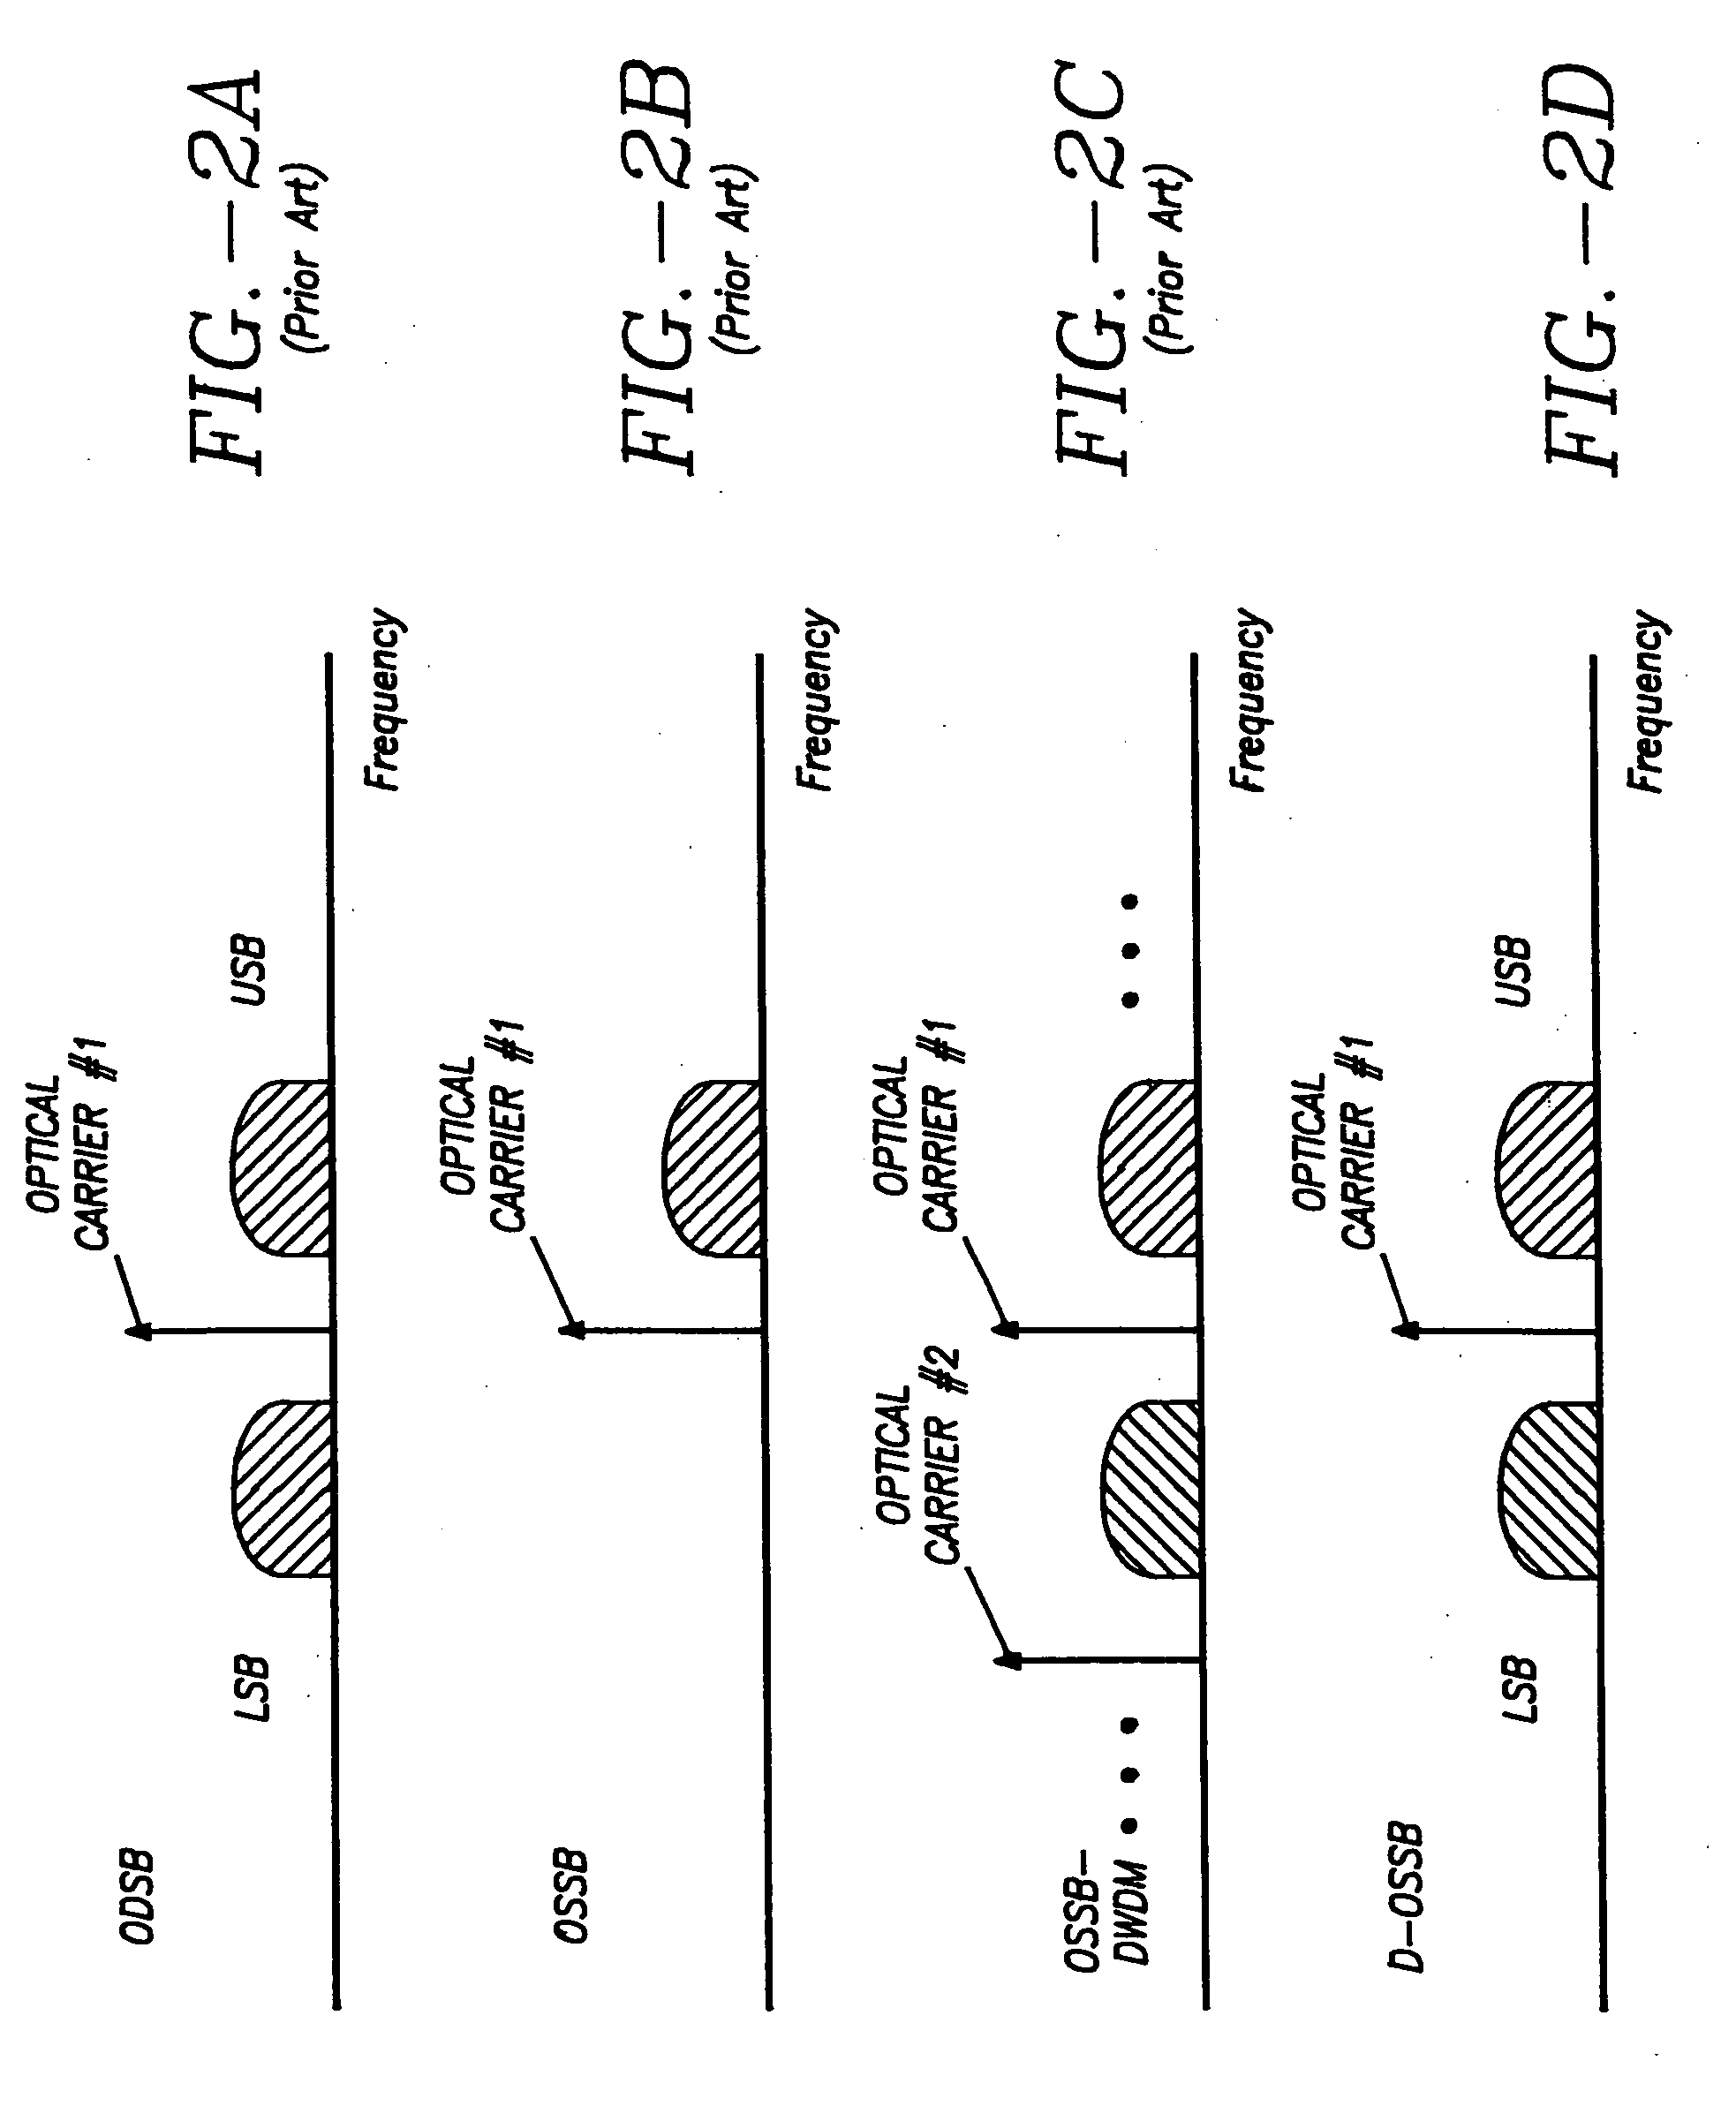 Method and apparatus for interleaved optical single sideband modulation